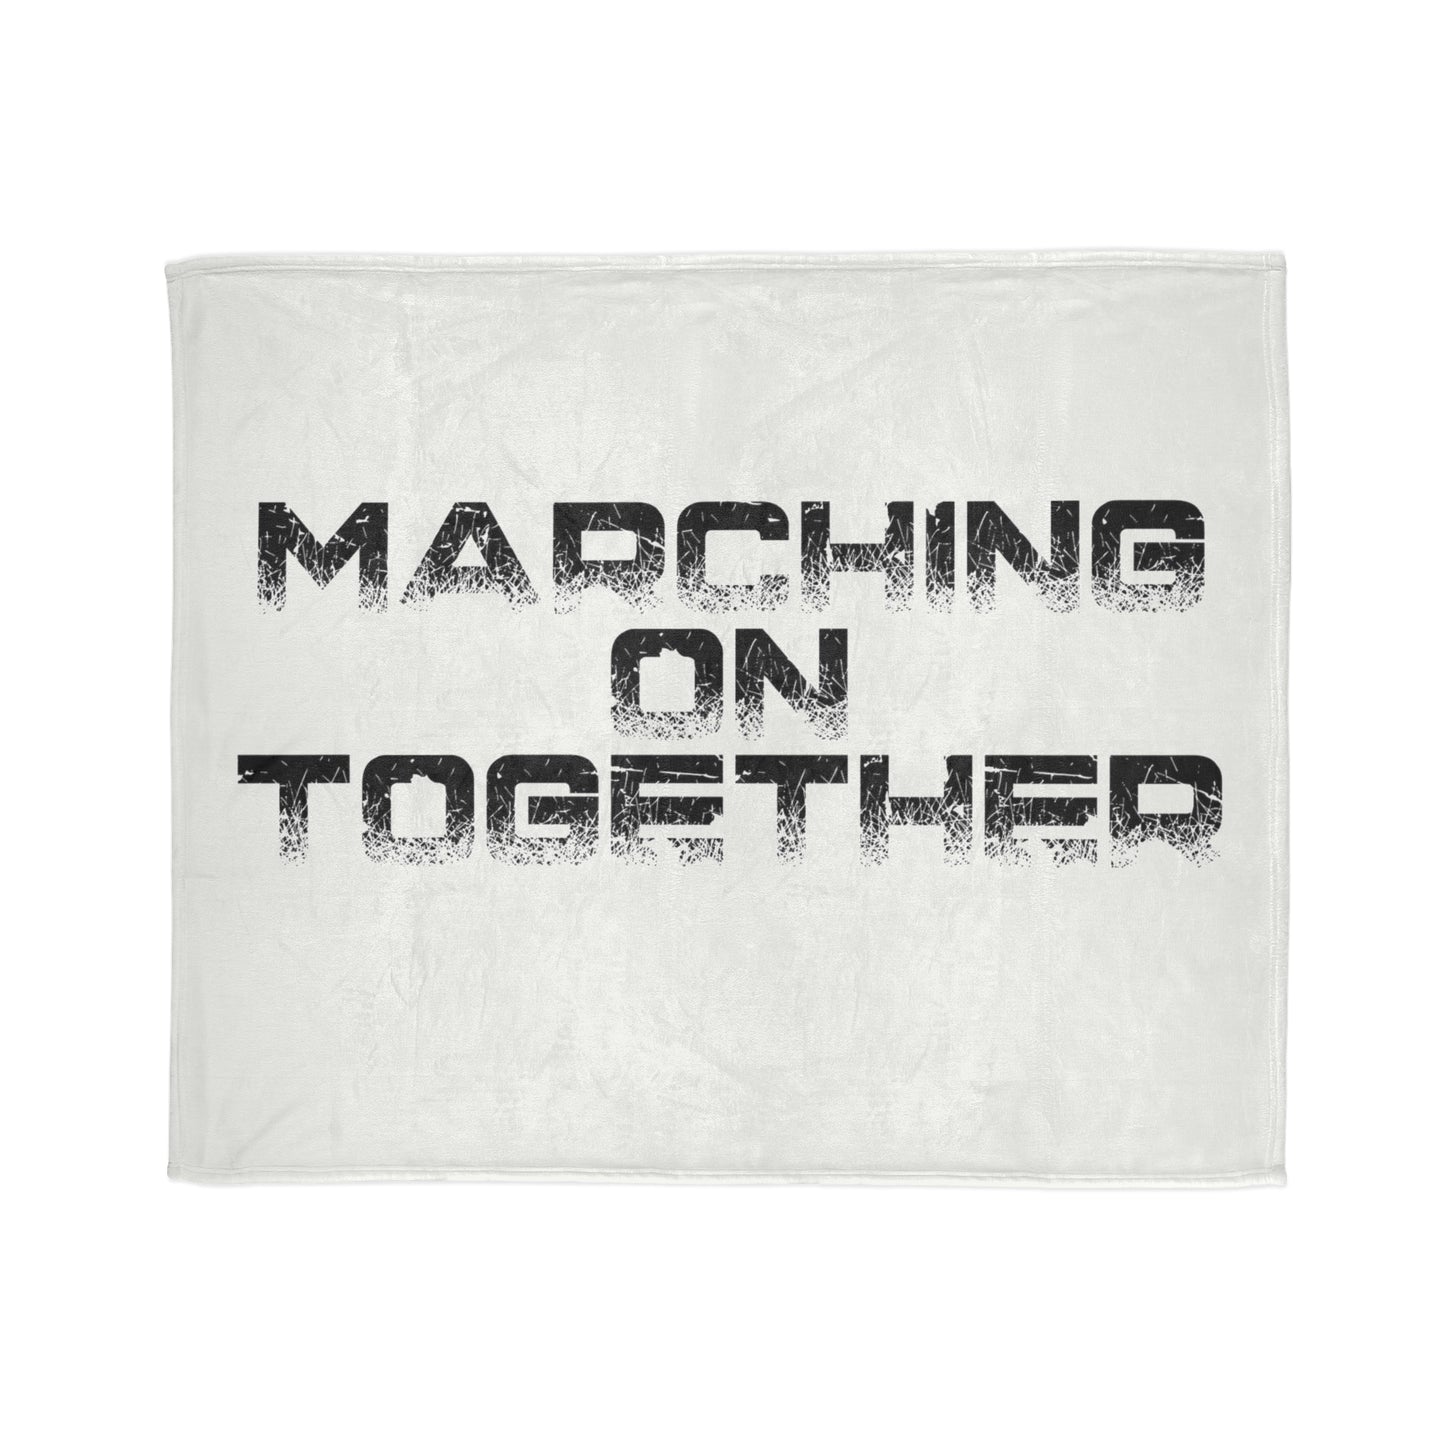 Marching On Together Blanket